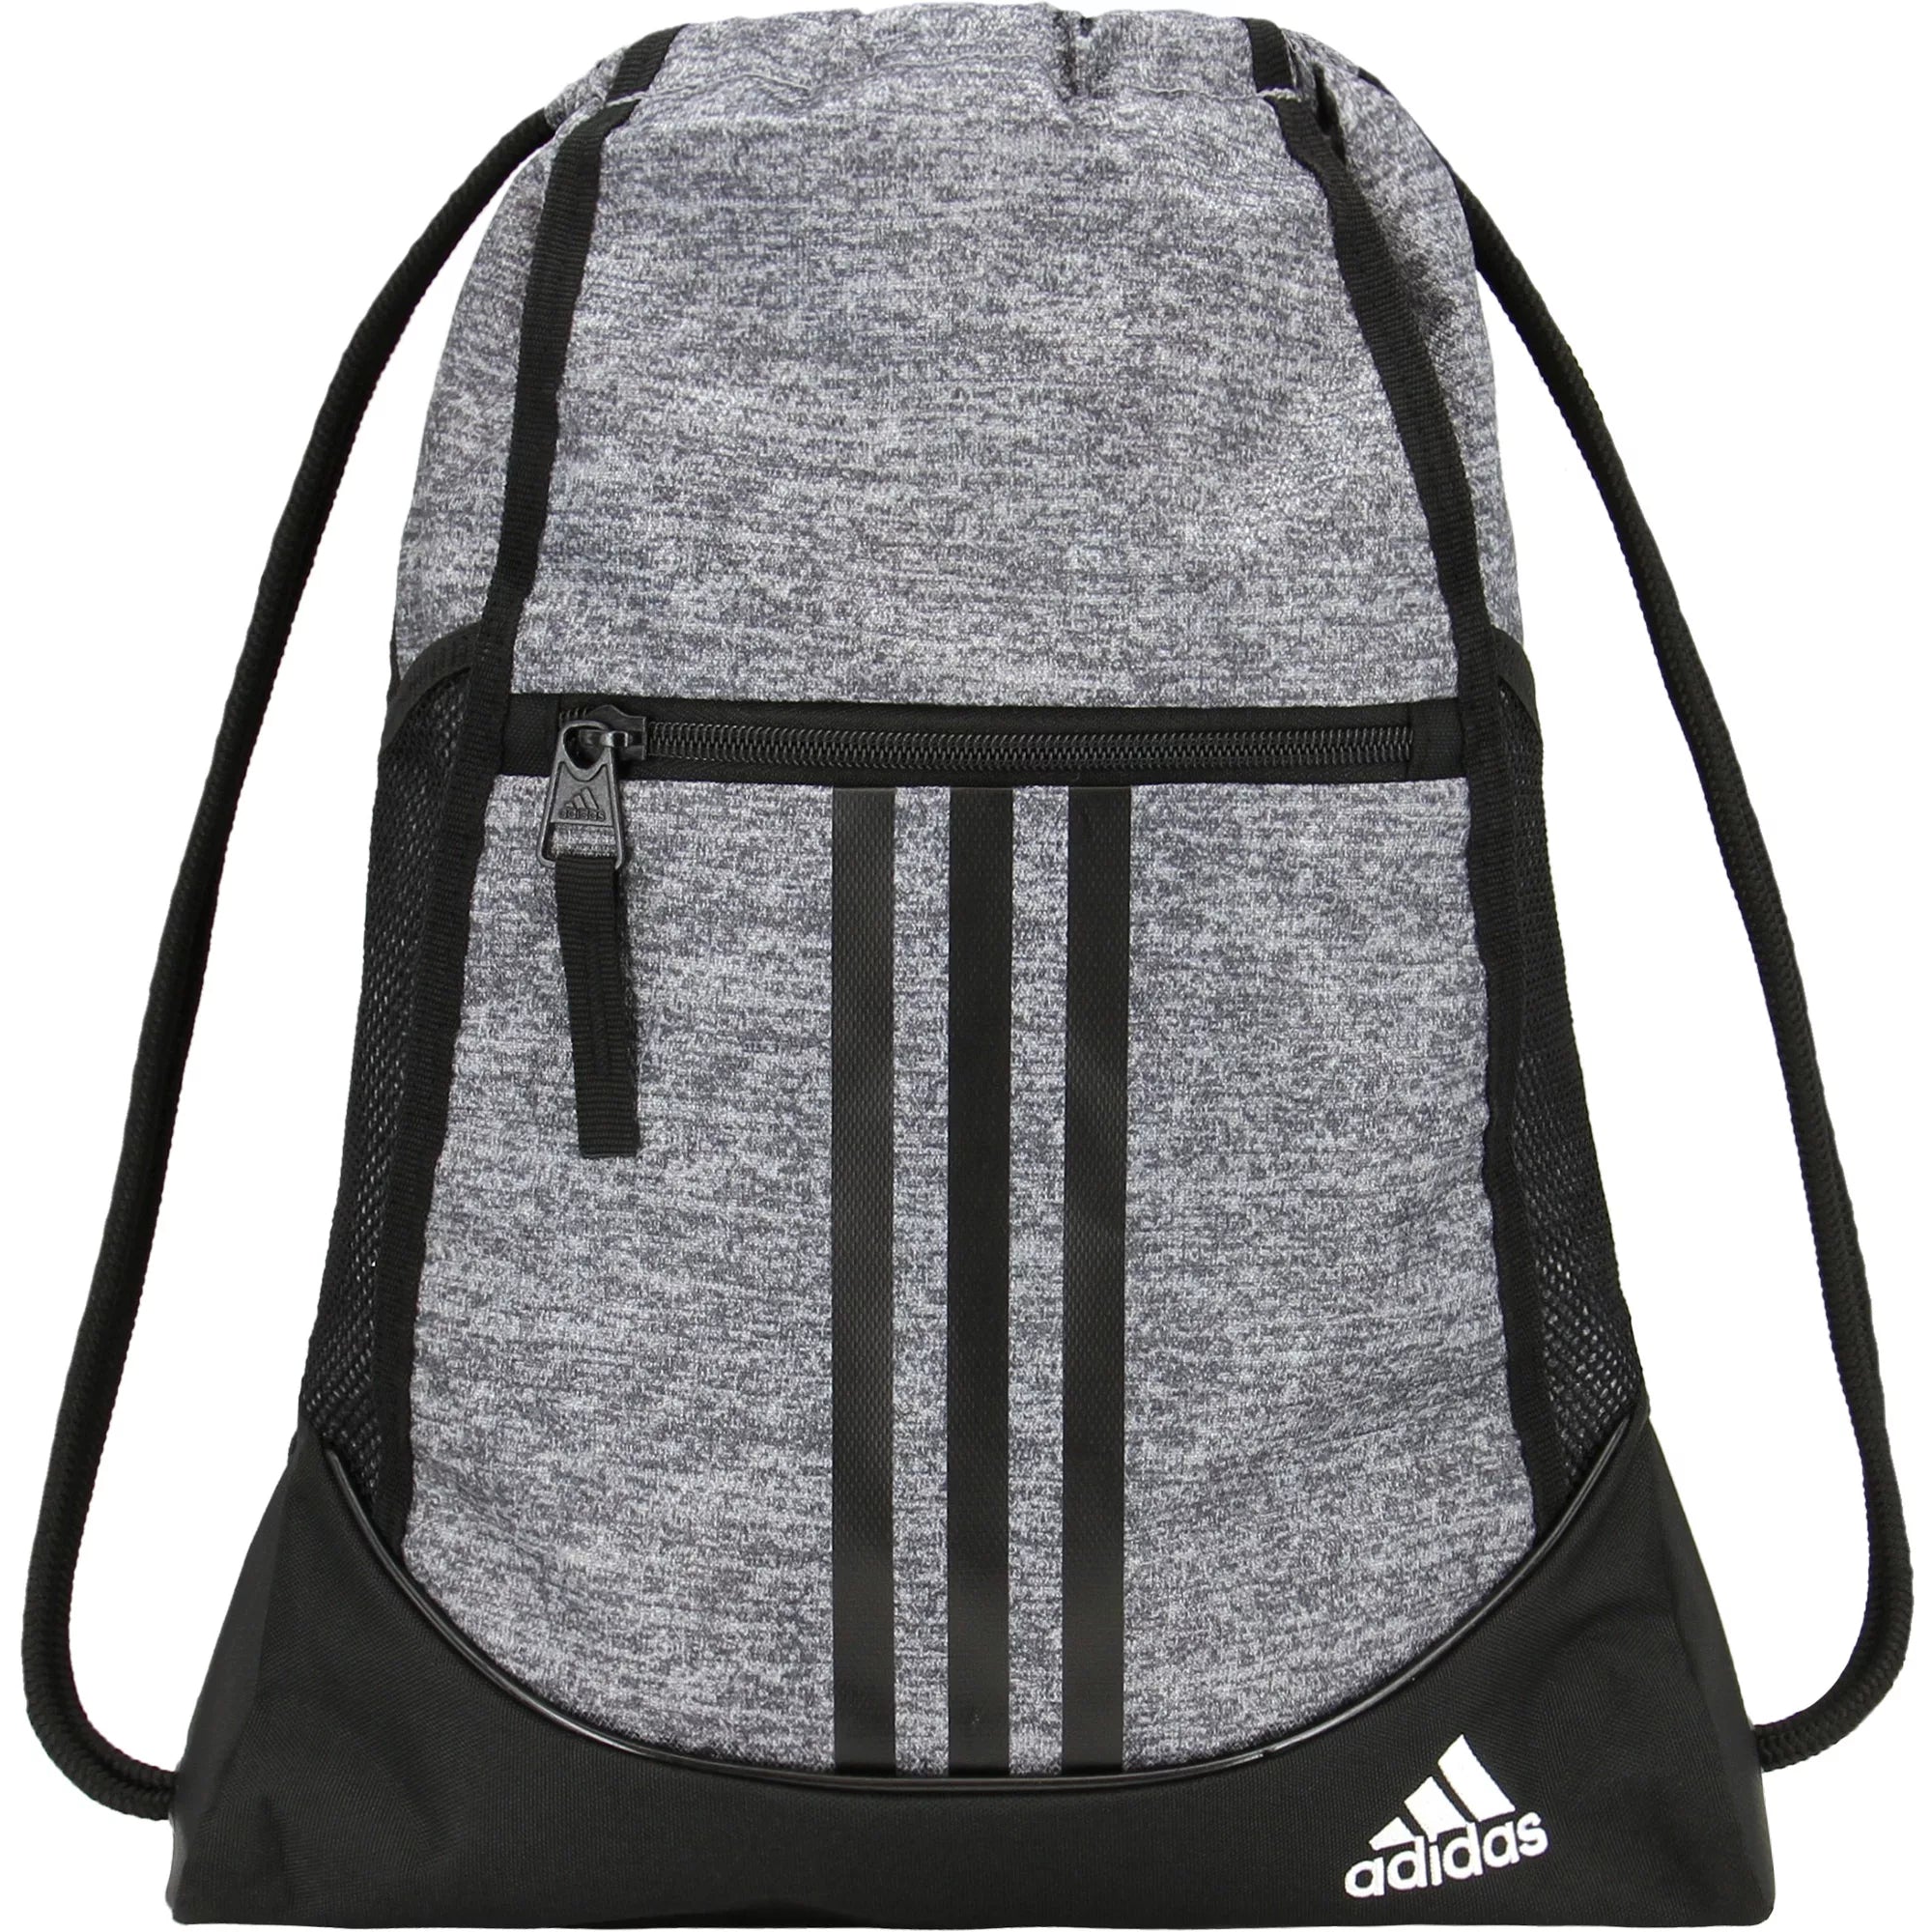 Adidas Alliance II Sackpack - Grey/Black